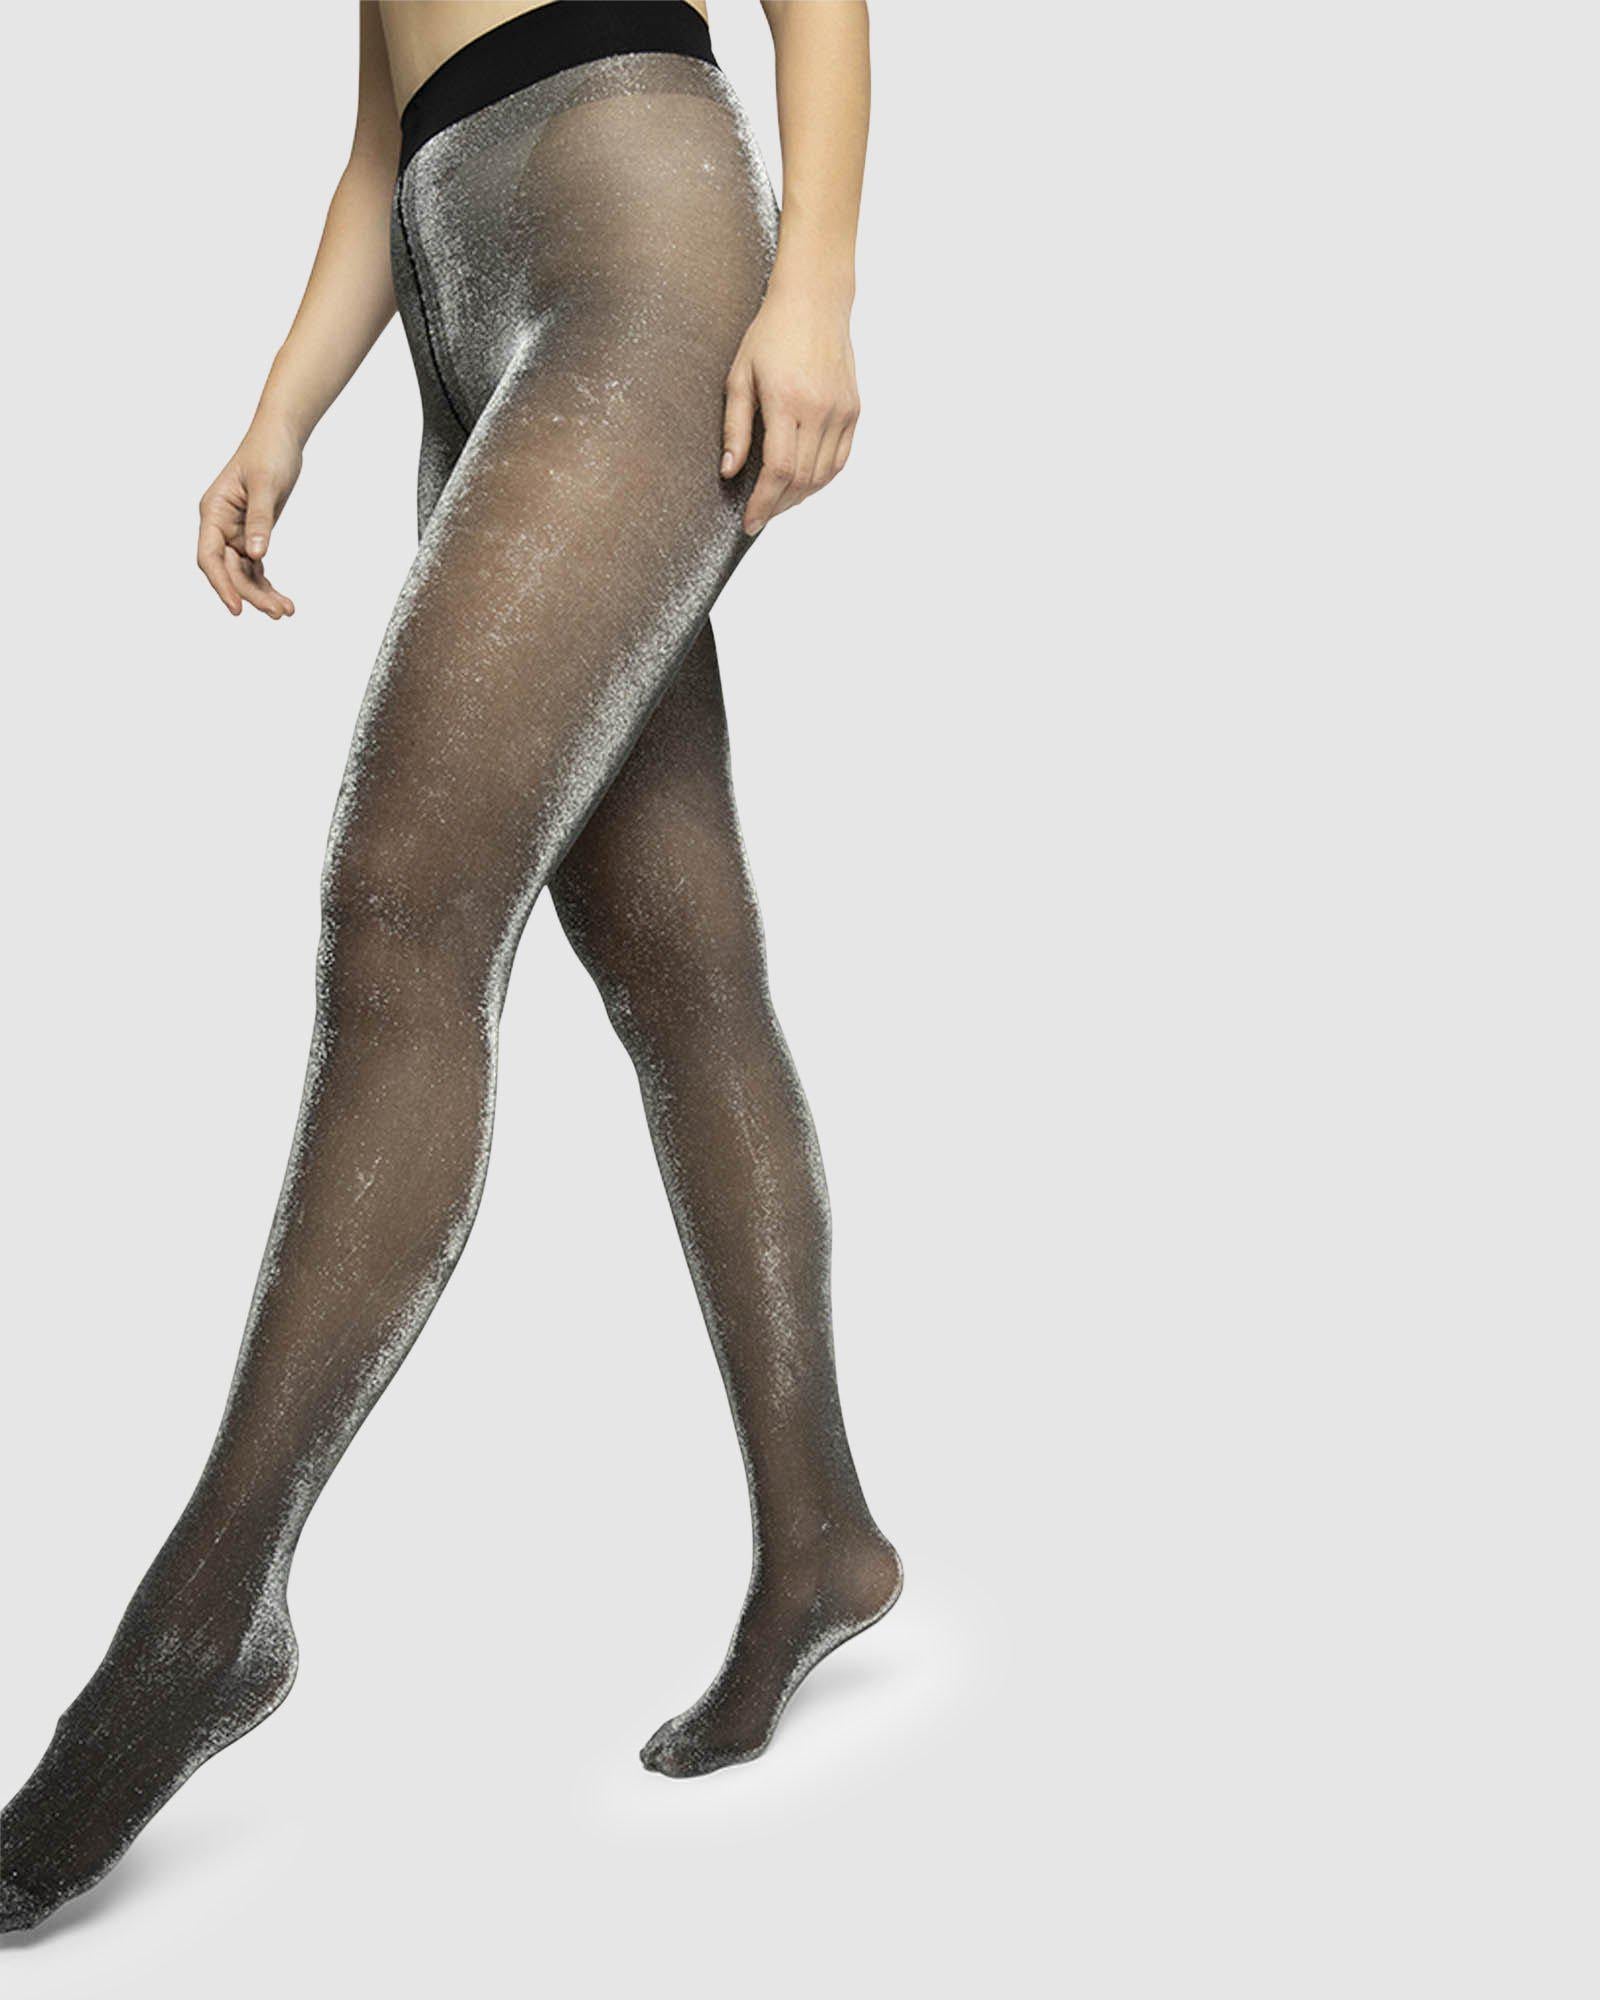 Sexy Ladies Glitter Tights Spandex Satin Glossy Opaque Pantyhose Shiny  Hosiery | eBay